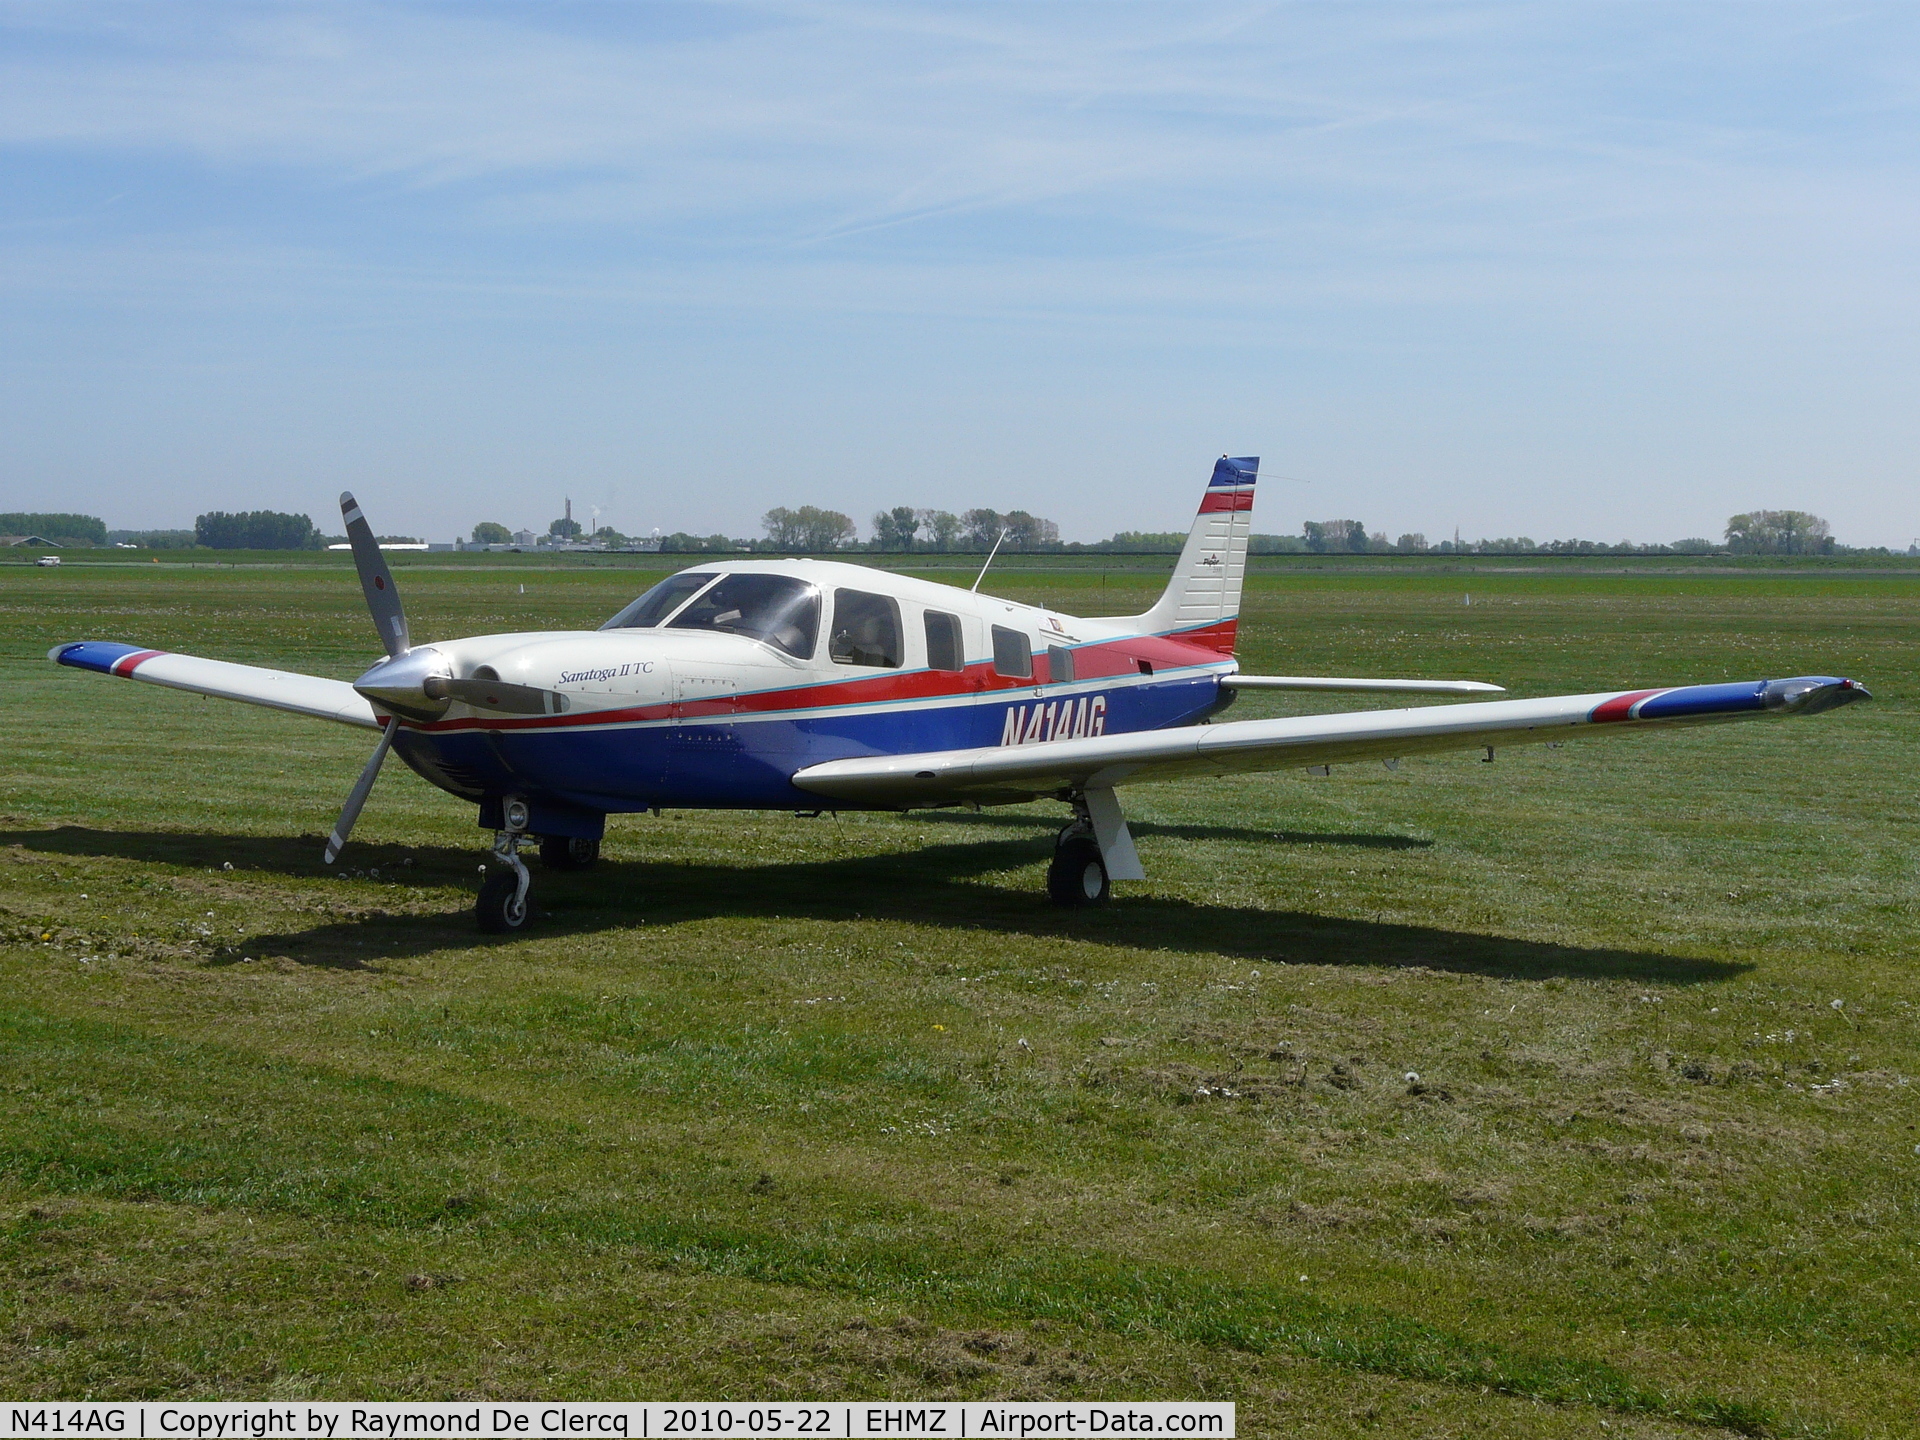 N414AG, 2000 Piper PA-32R-301T Turbo Saratoga C/N 3257184, Midden-Zeeland open door 2010.